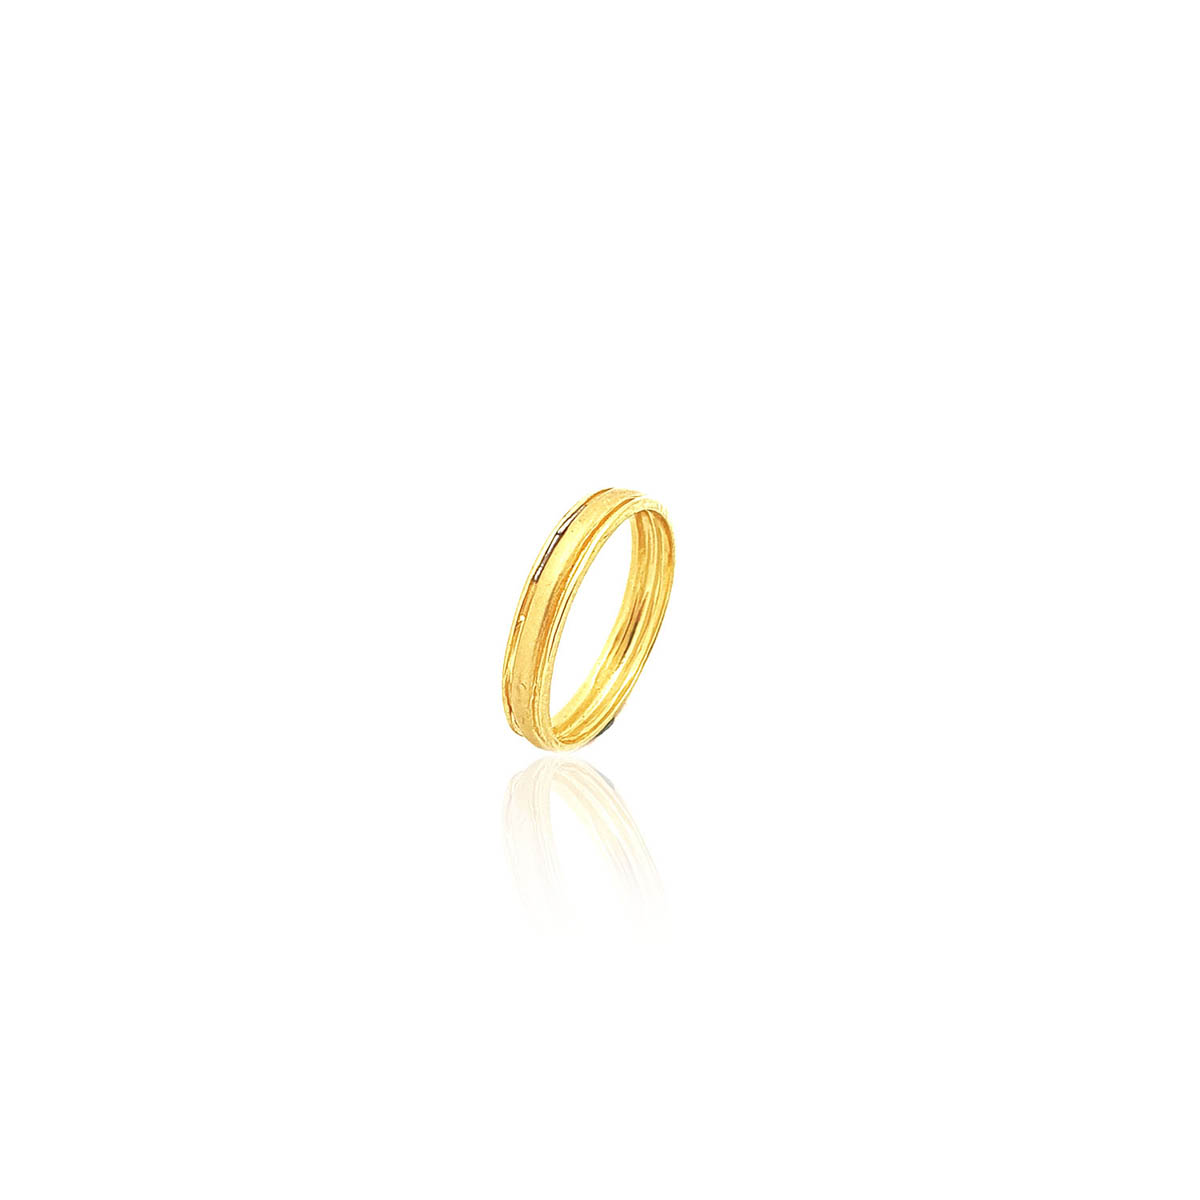 Buy 100+ Everyday Rings Online | BlueStone.com - India's #1 Online  Jewellery Brand